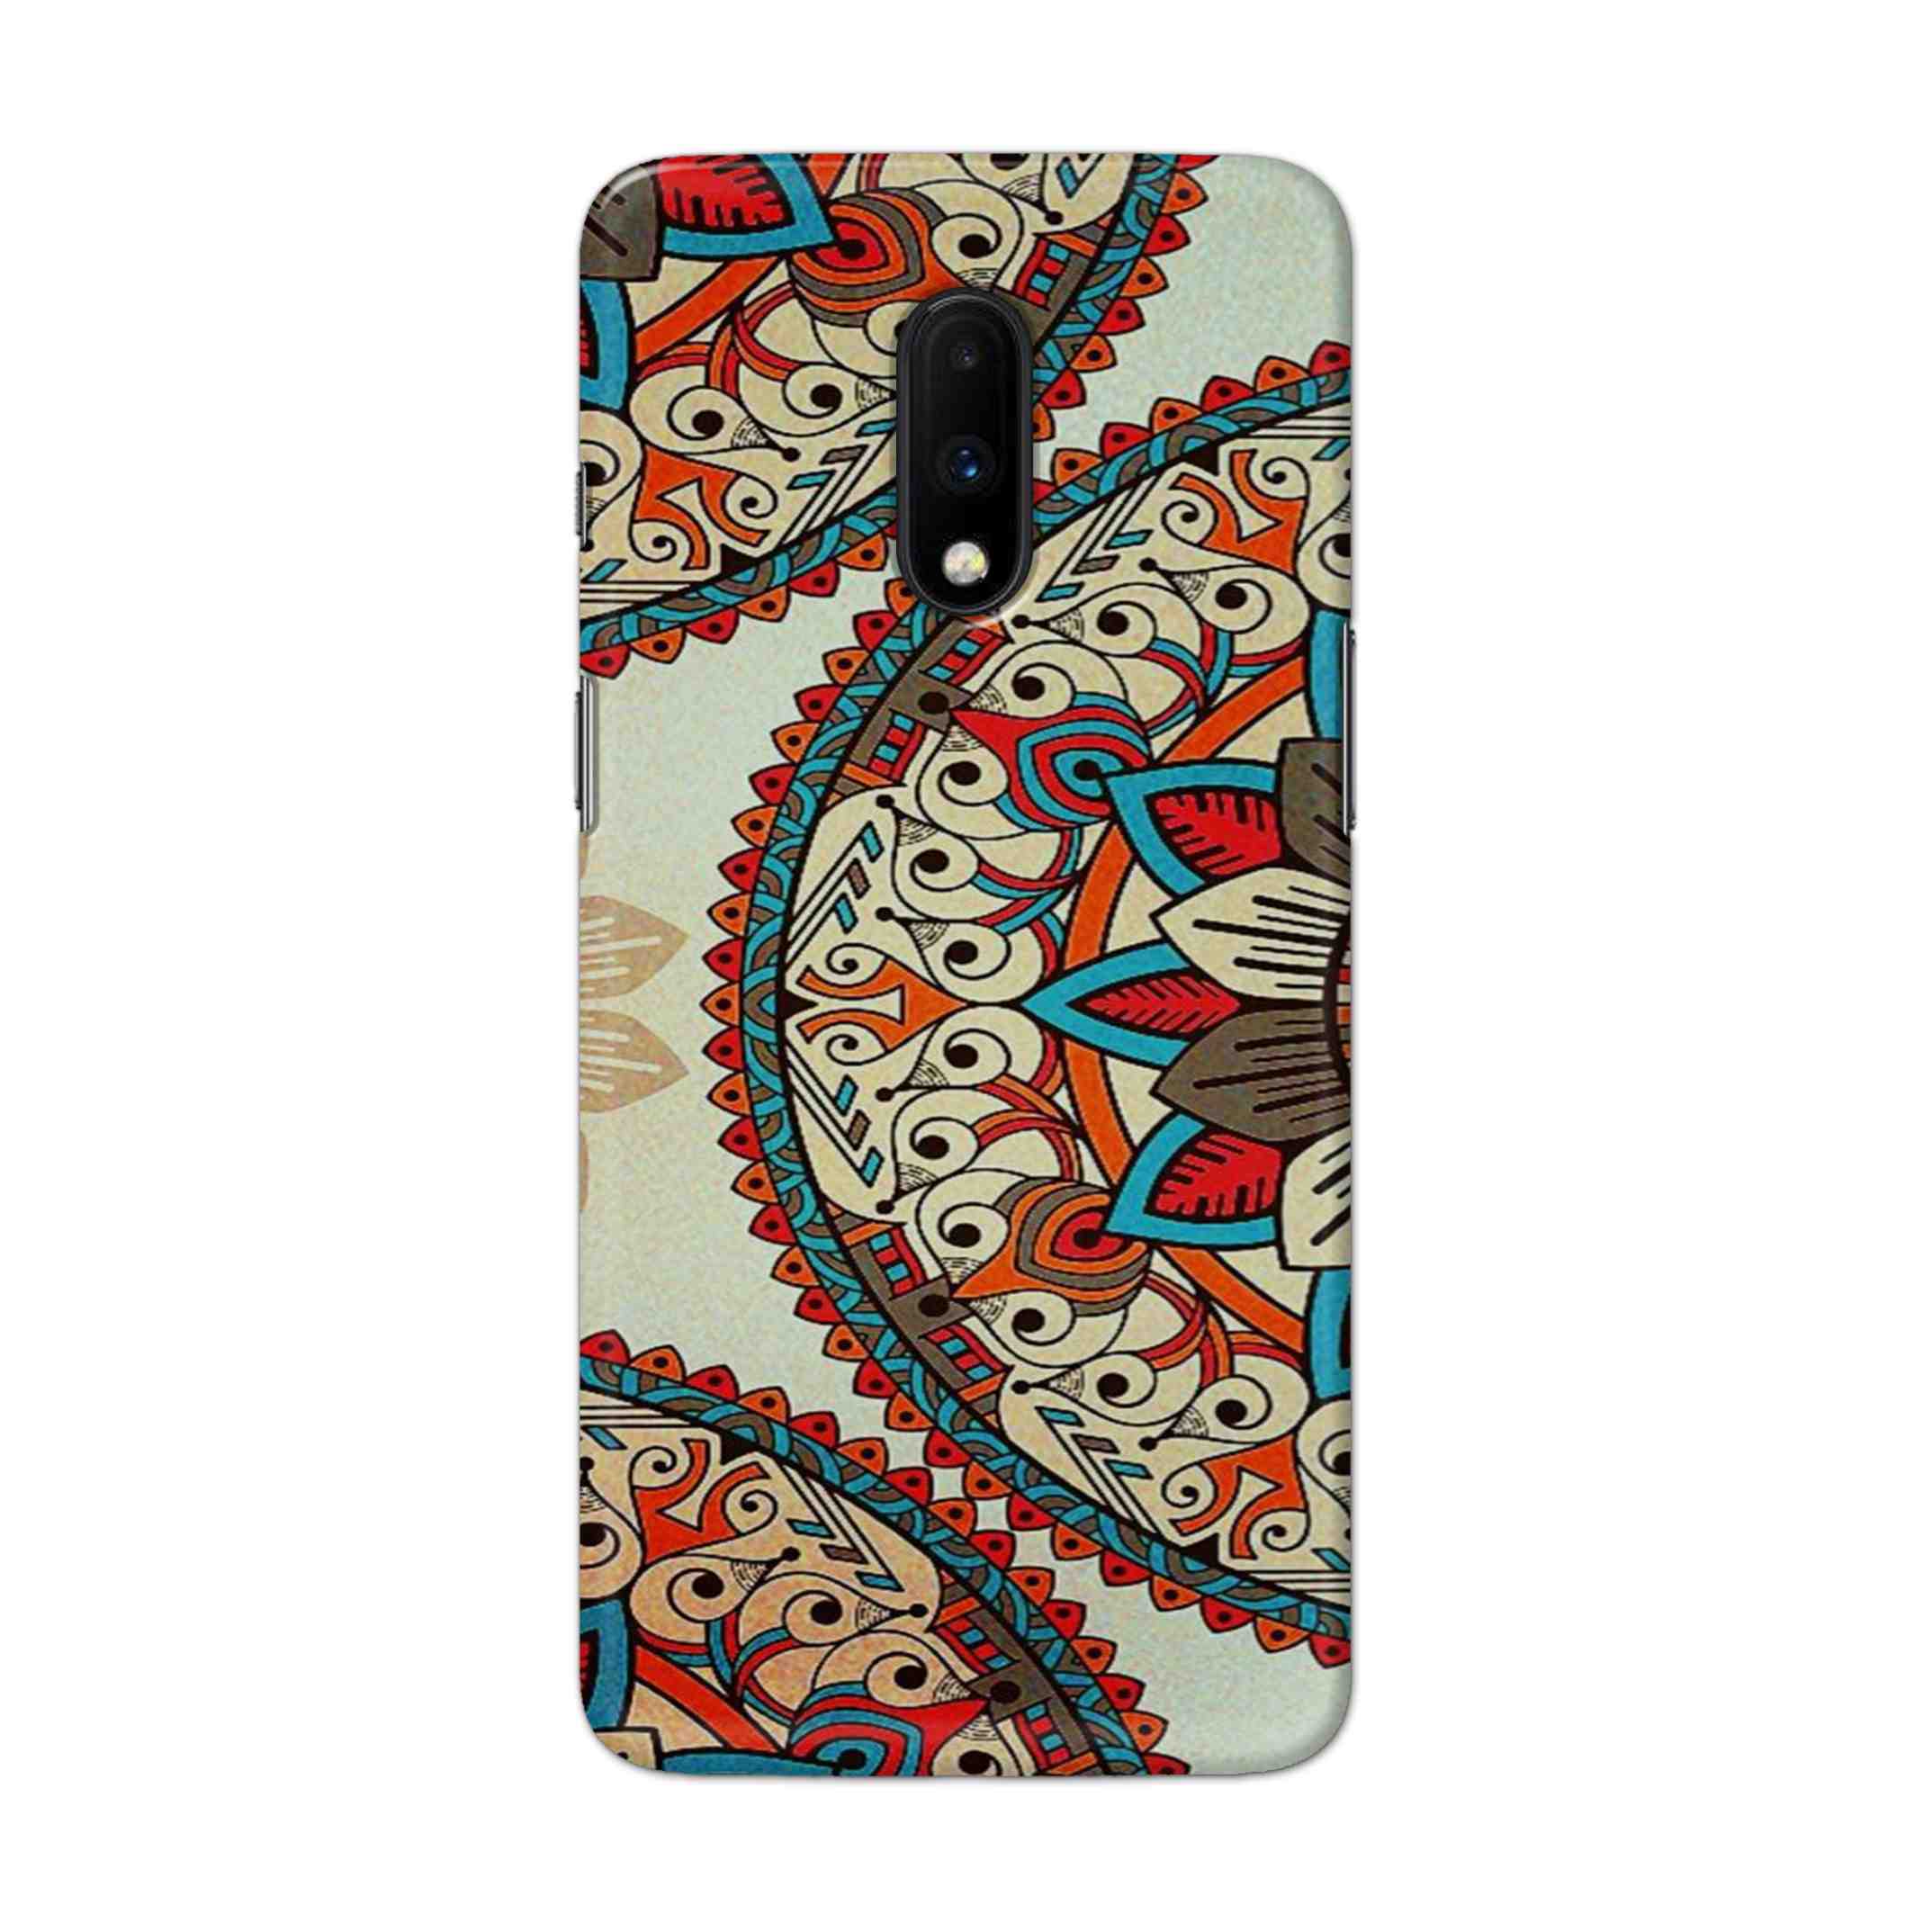 Buy Aztec Mandalas Hard Back Mobile Phone Case Cover For OnePlus 7 Online